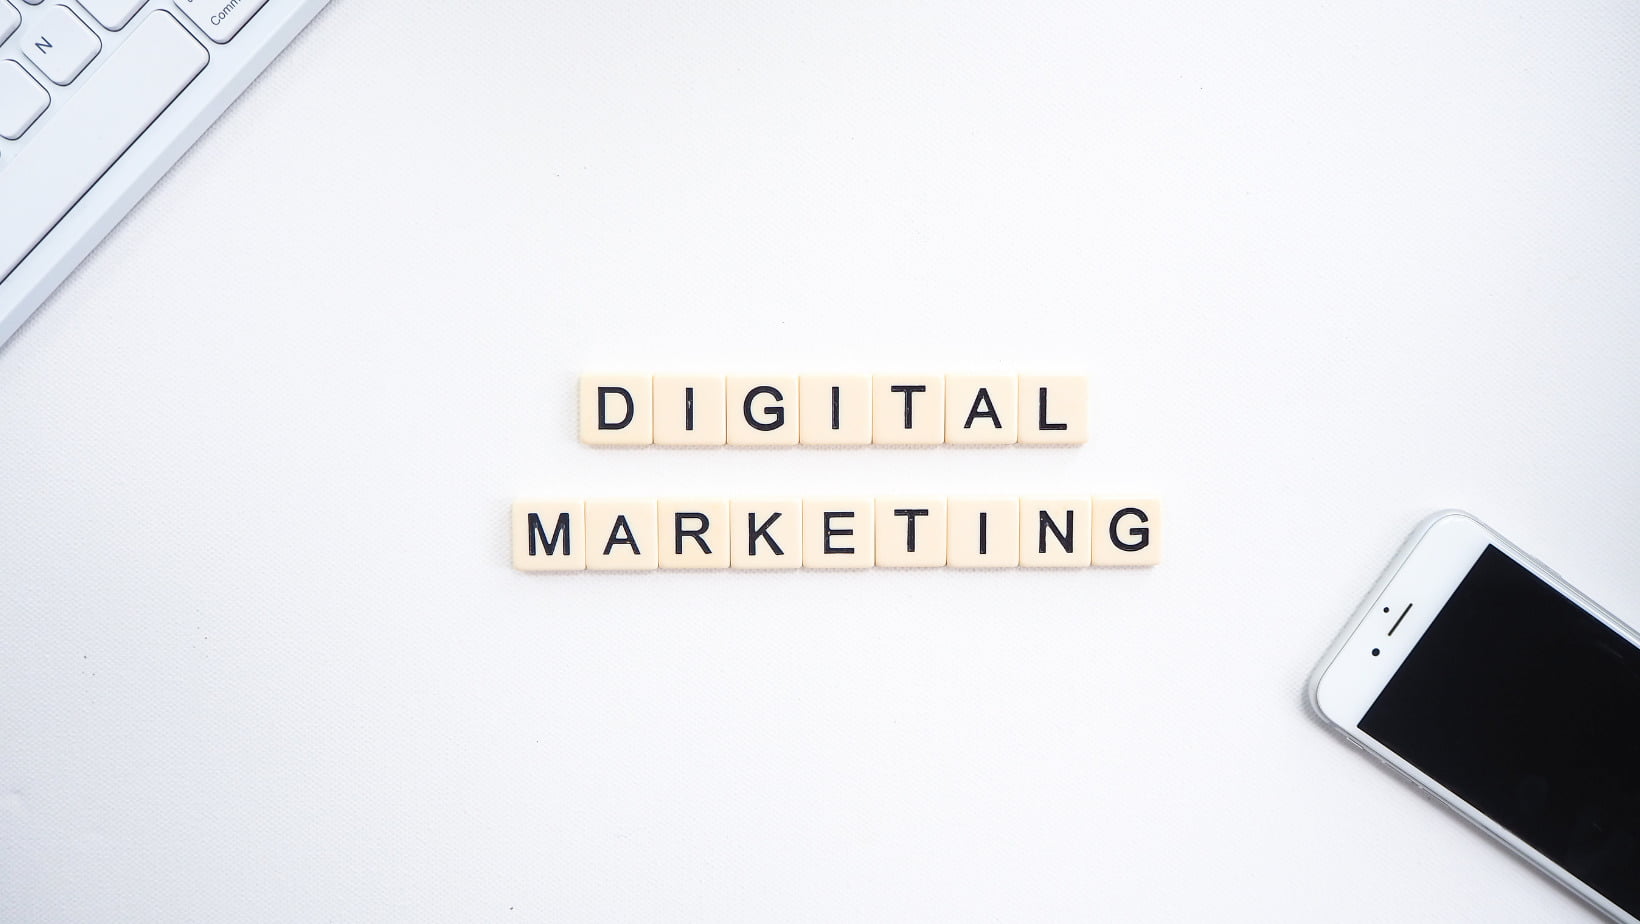 Is Digital PR the same as Digital Marketing?